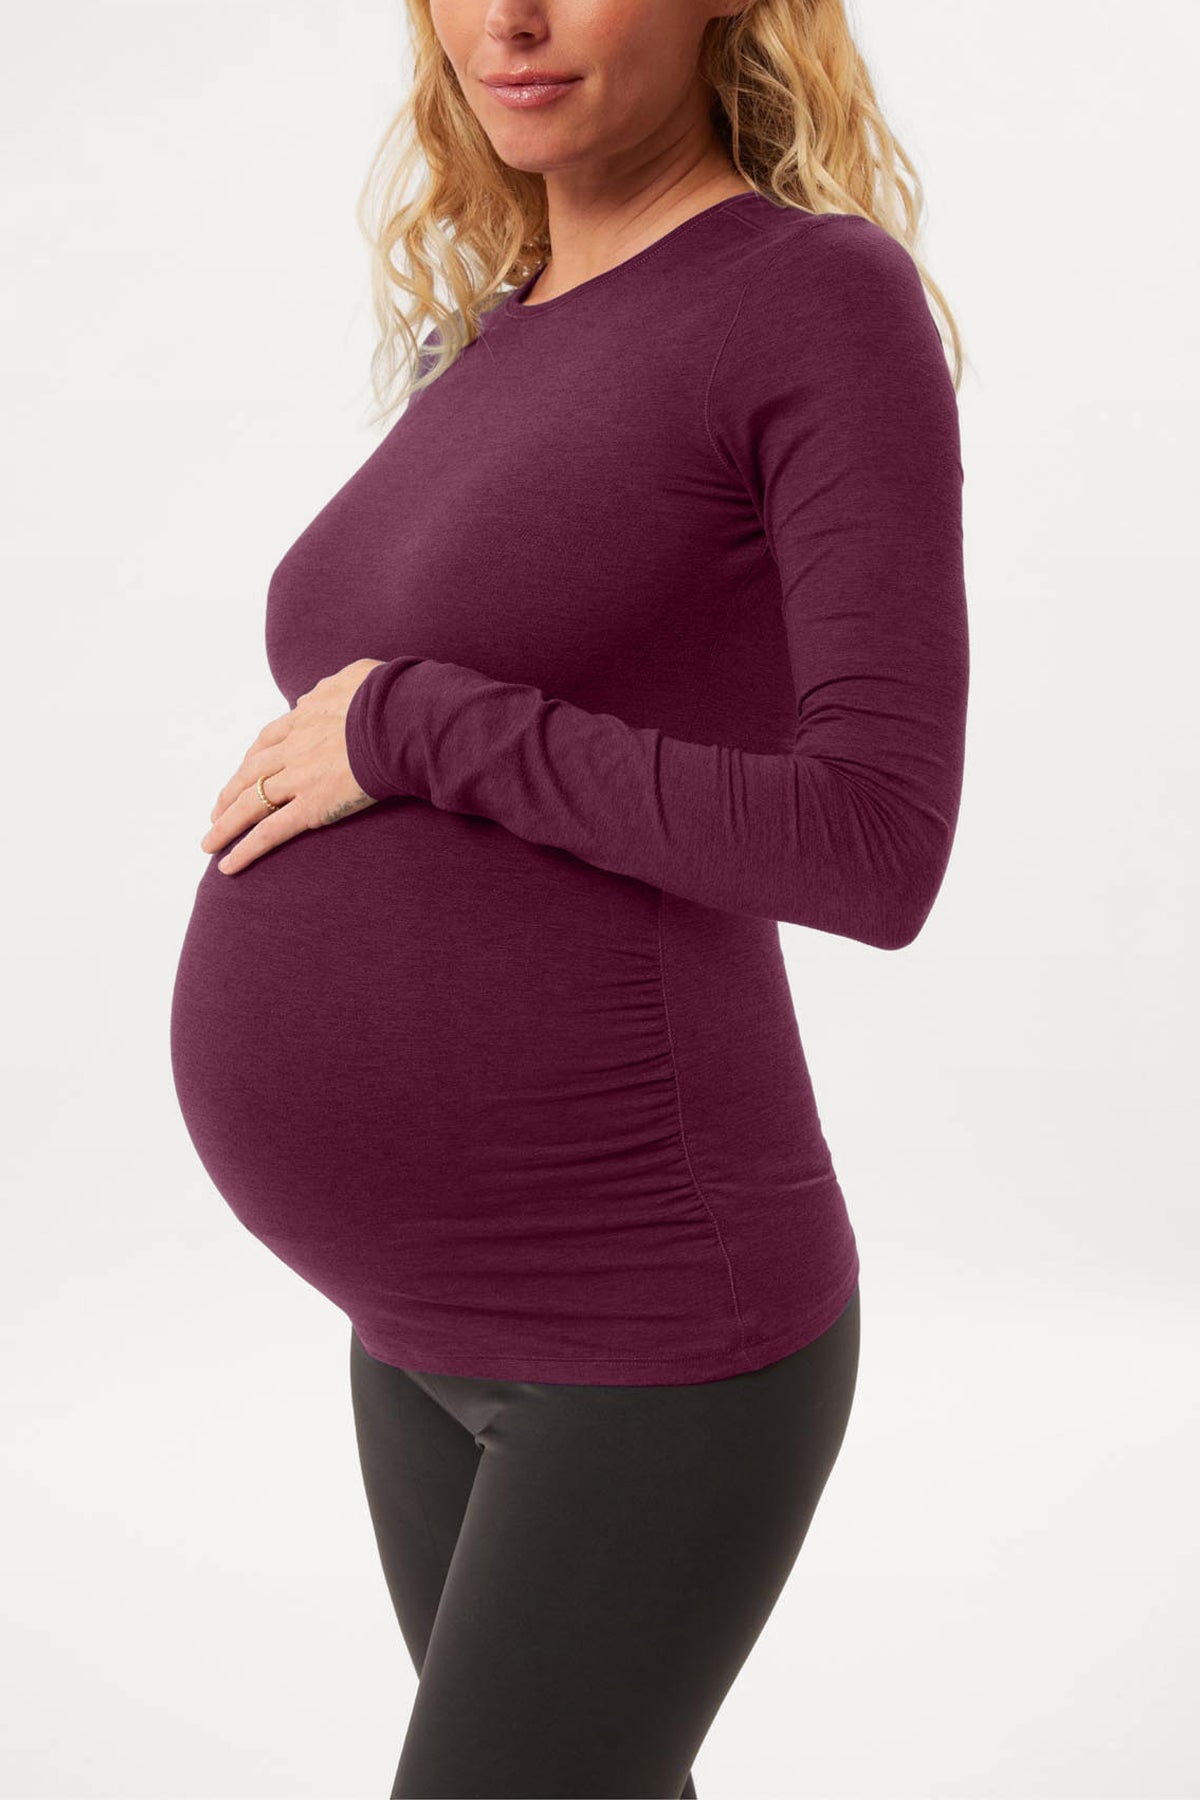 Moss ReSet Maternity Long Sleeve Tee — Girlfriend Collective